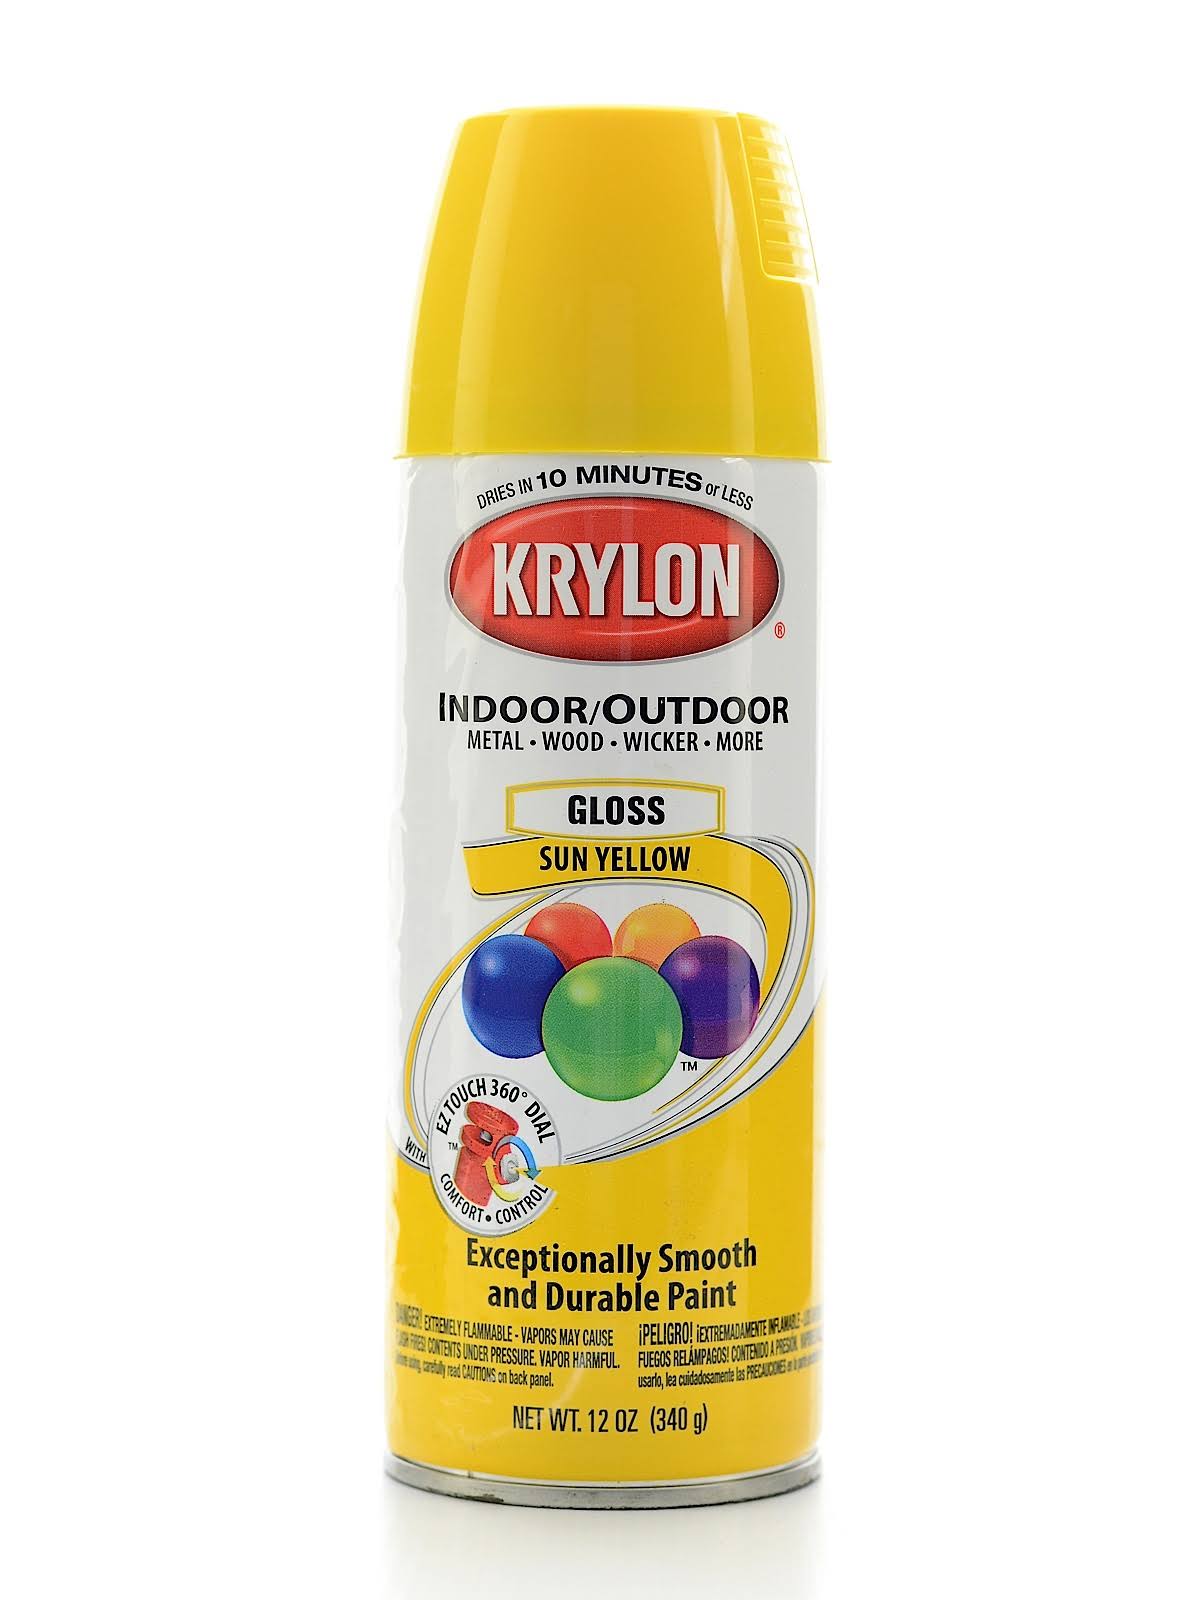 Krylon Color Master Spray Paint - Sun Yellow, 340g